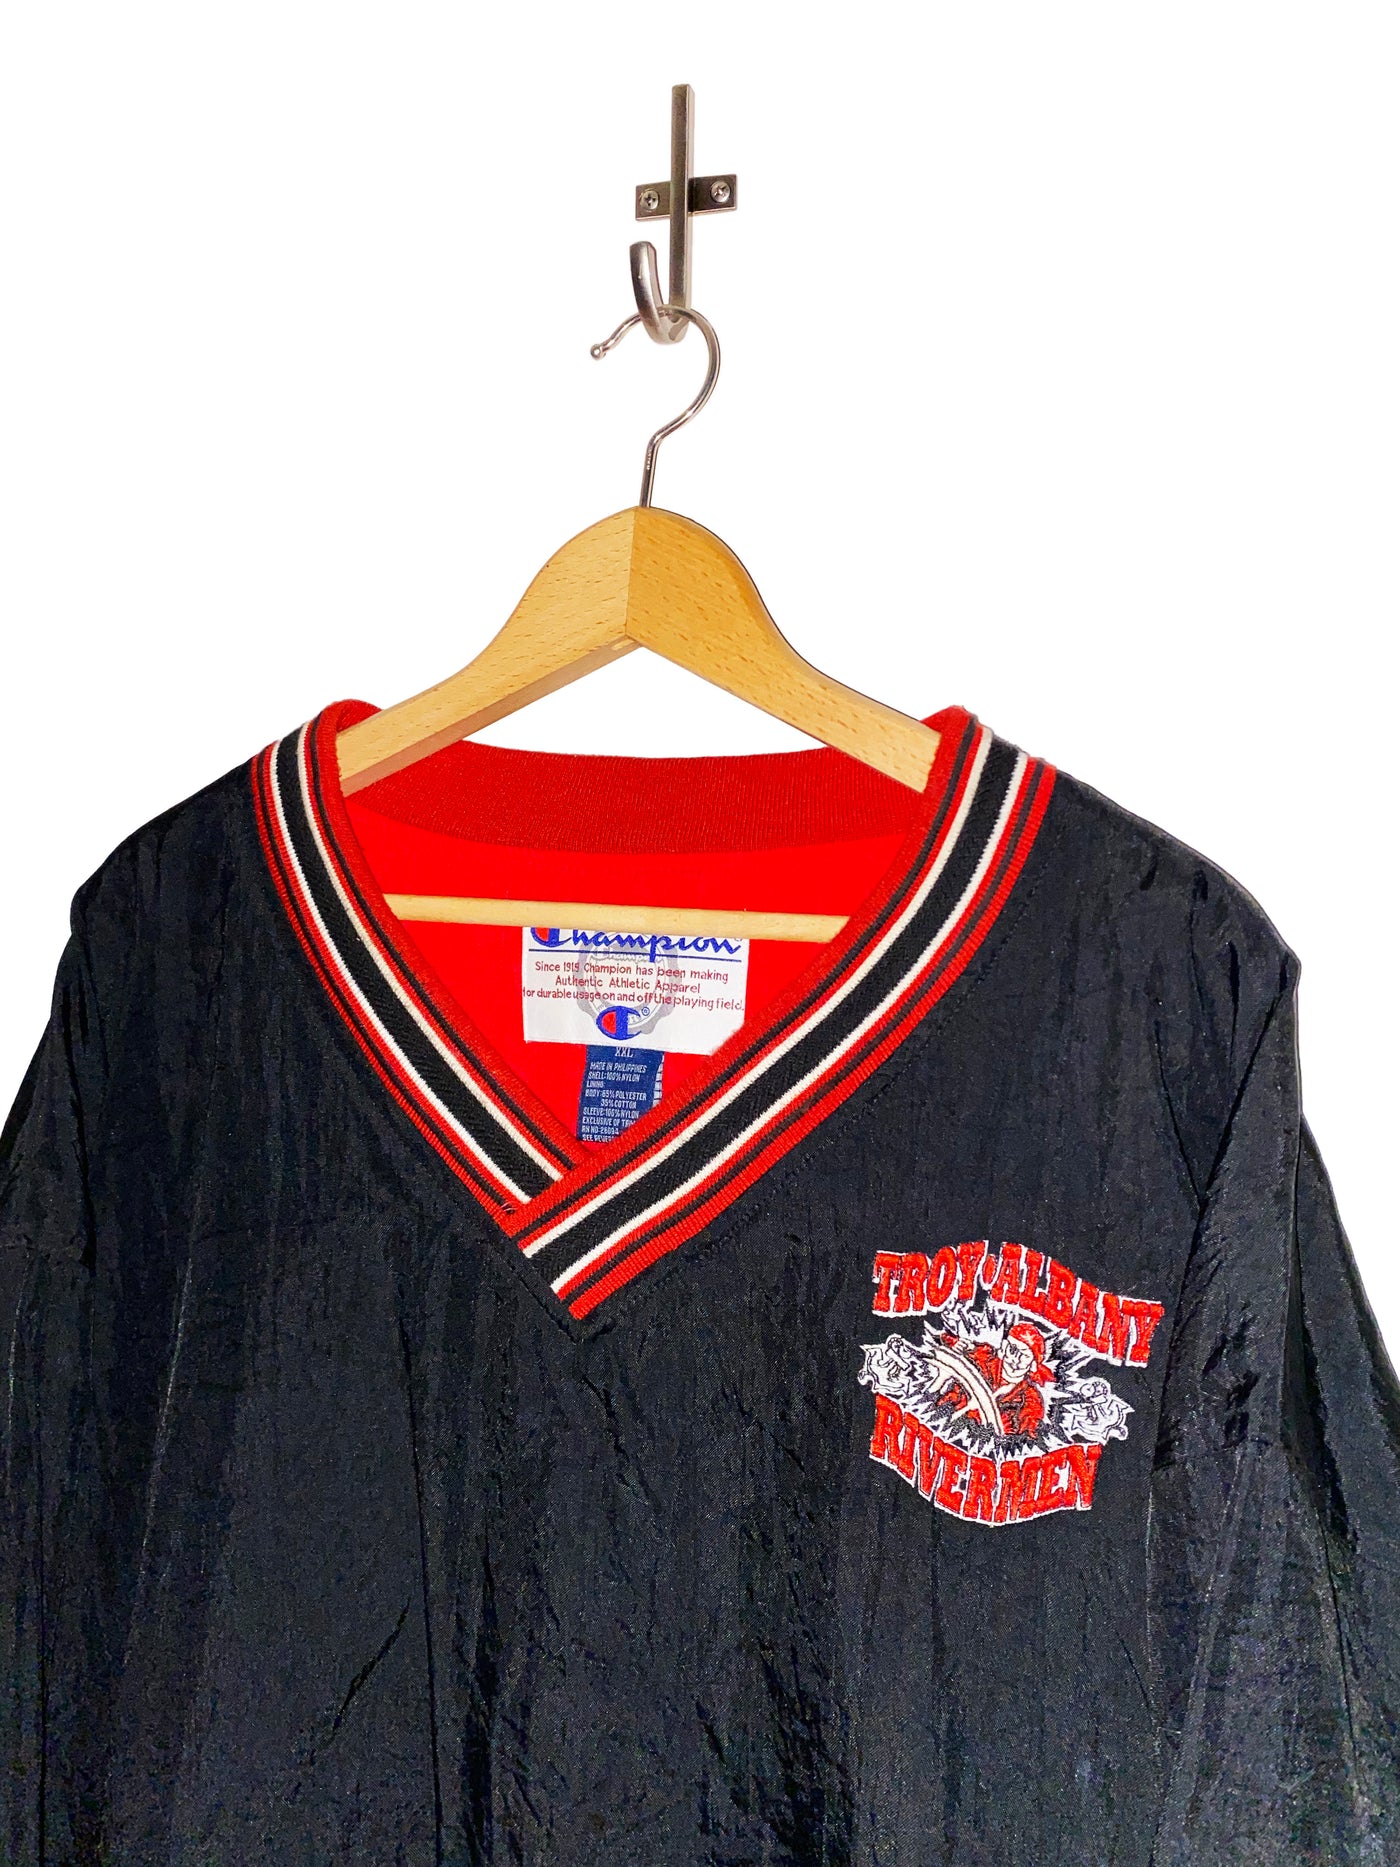 Vintage Troy-Albany Rivermen Champion Pullover